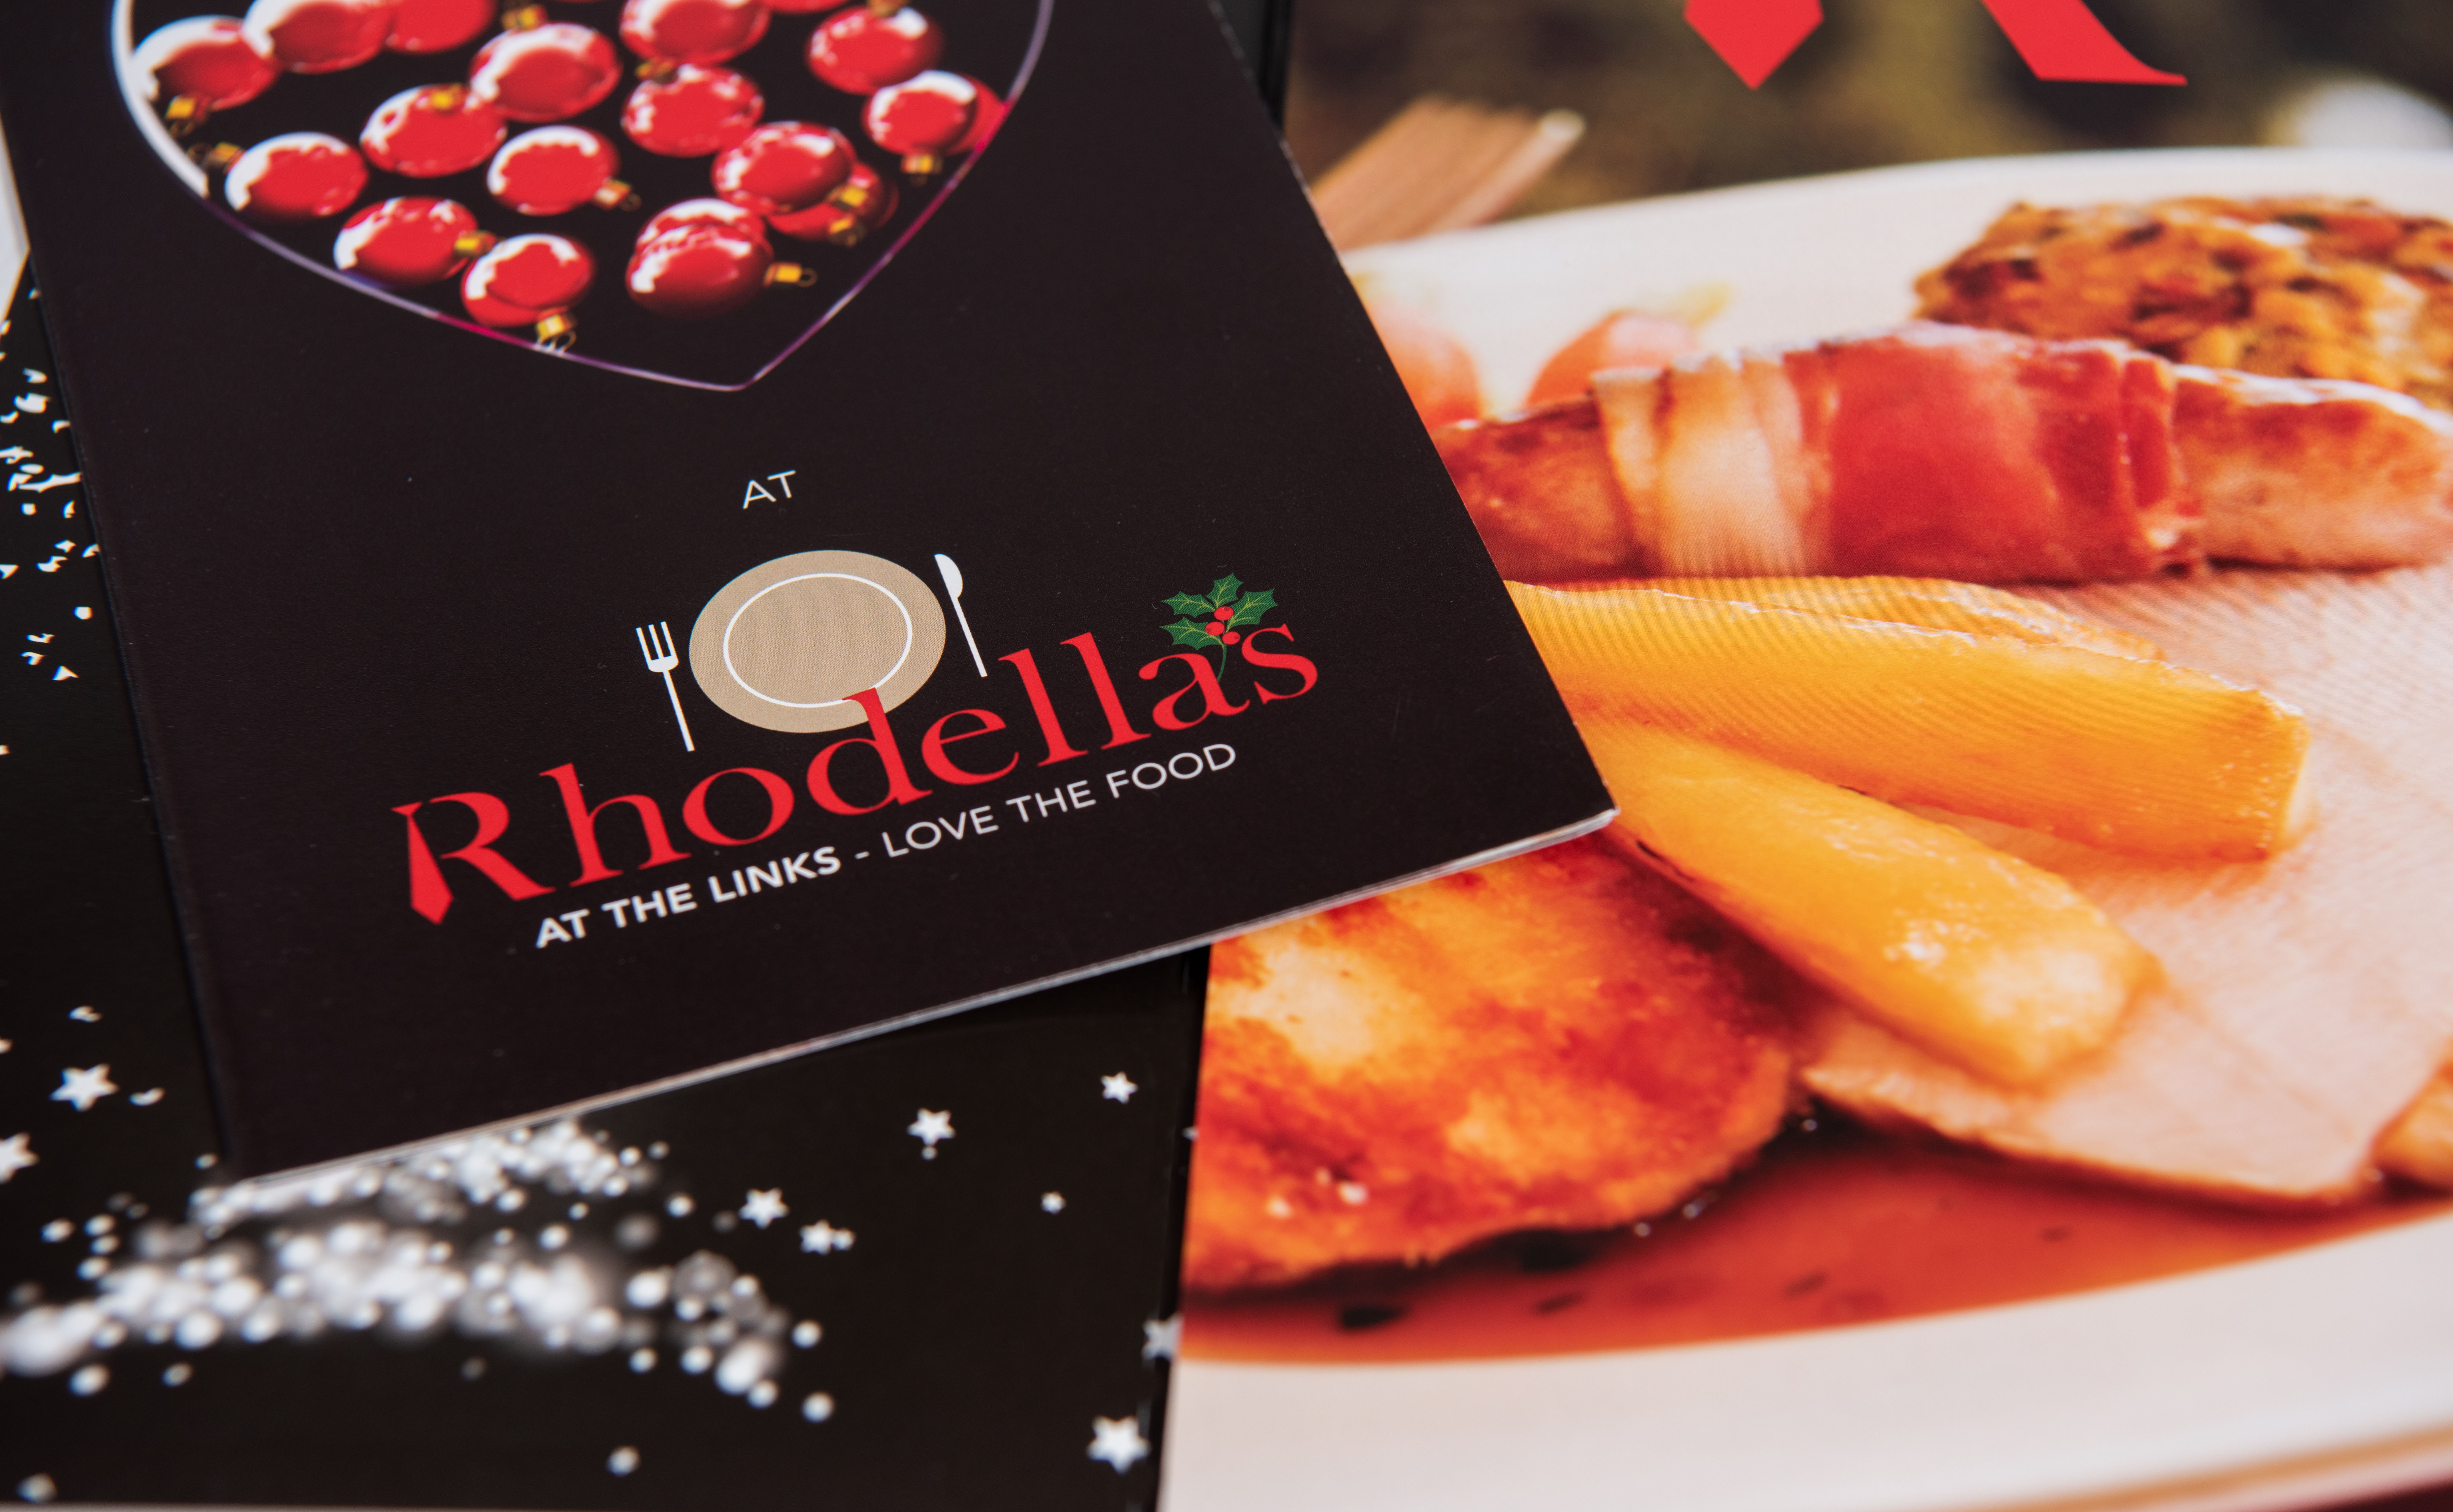 Rhodellas Christmas menu